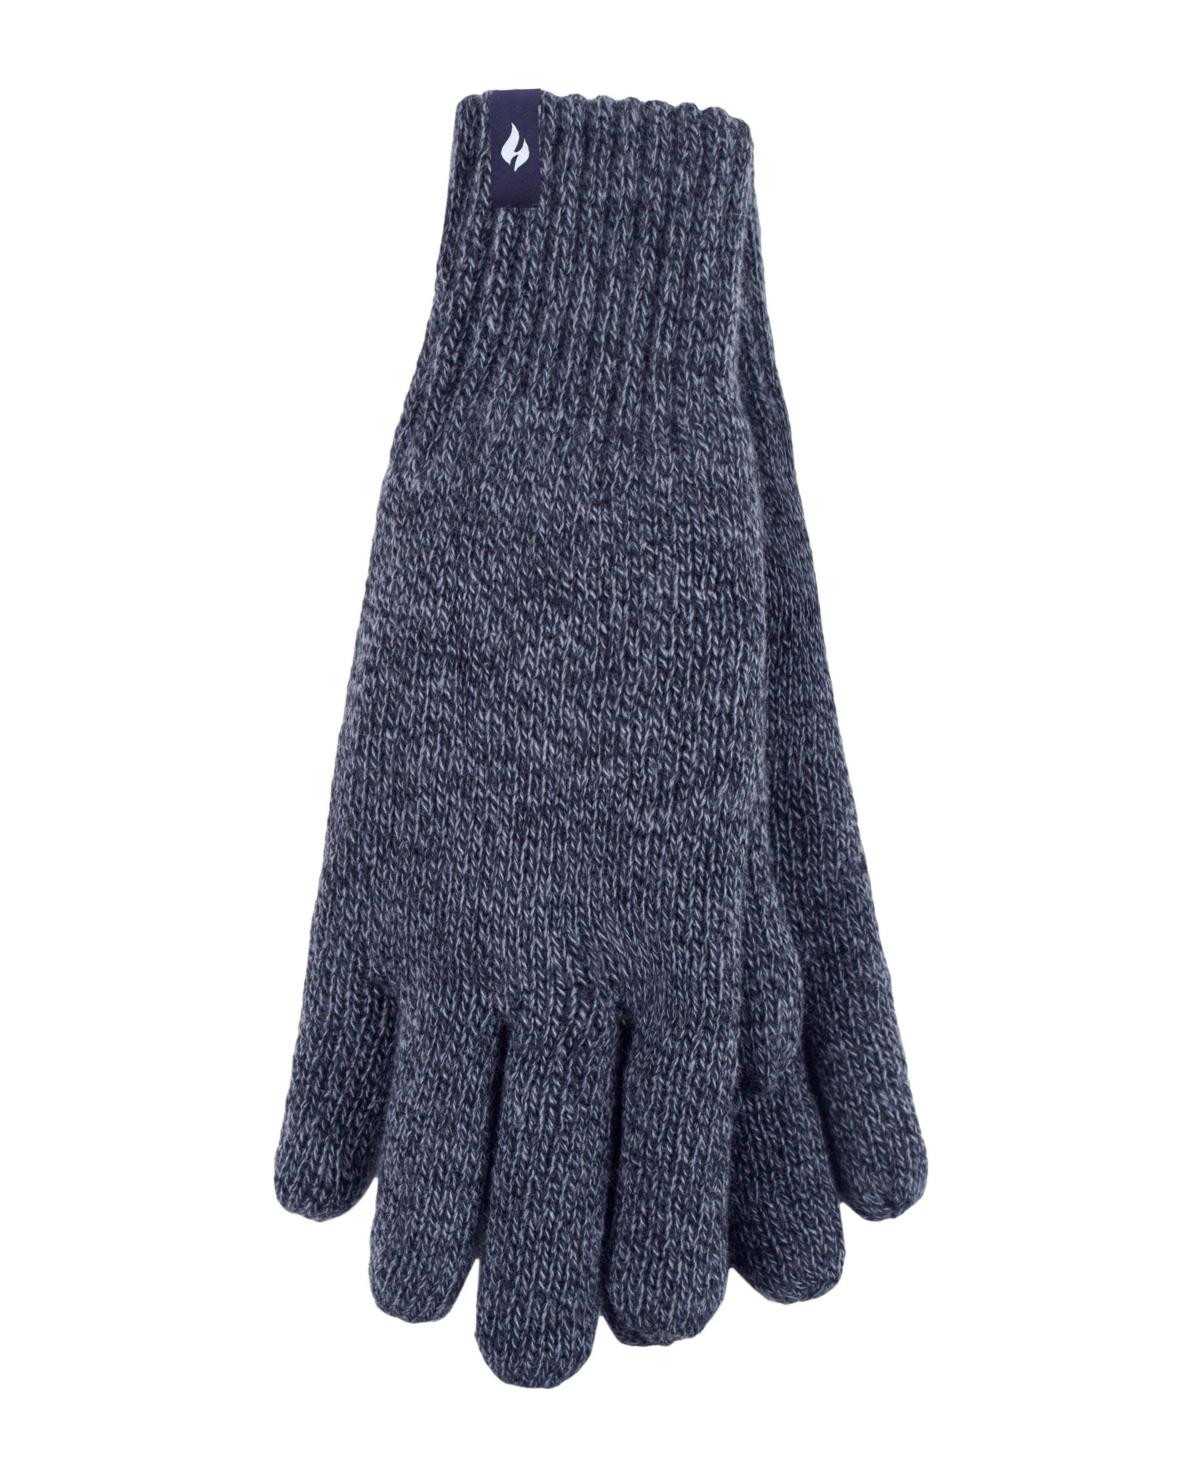 Men's Nevis Solid Flat Knit Gloves - Navy